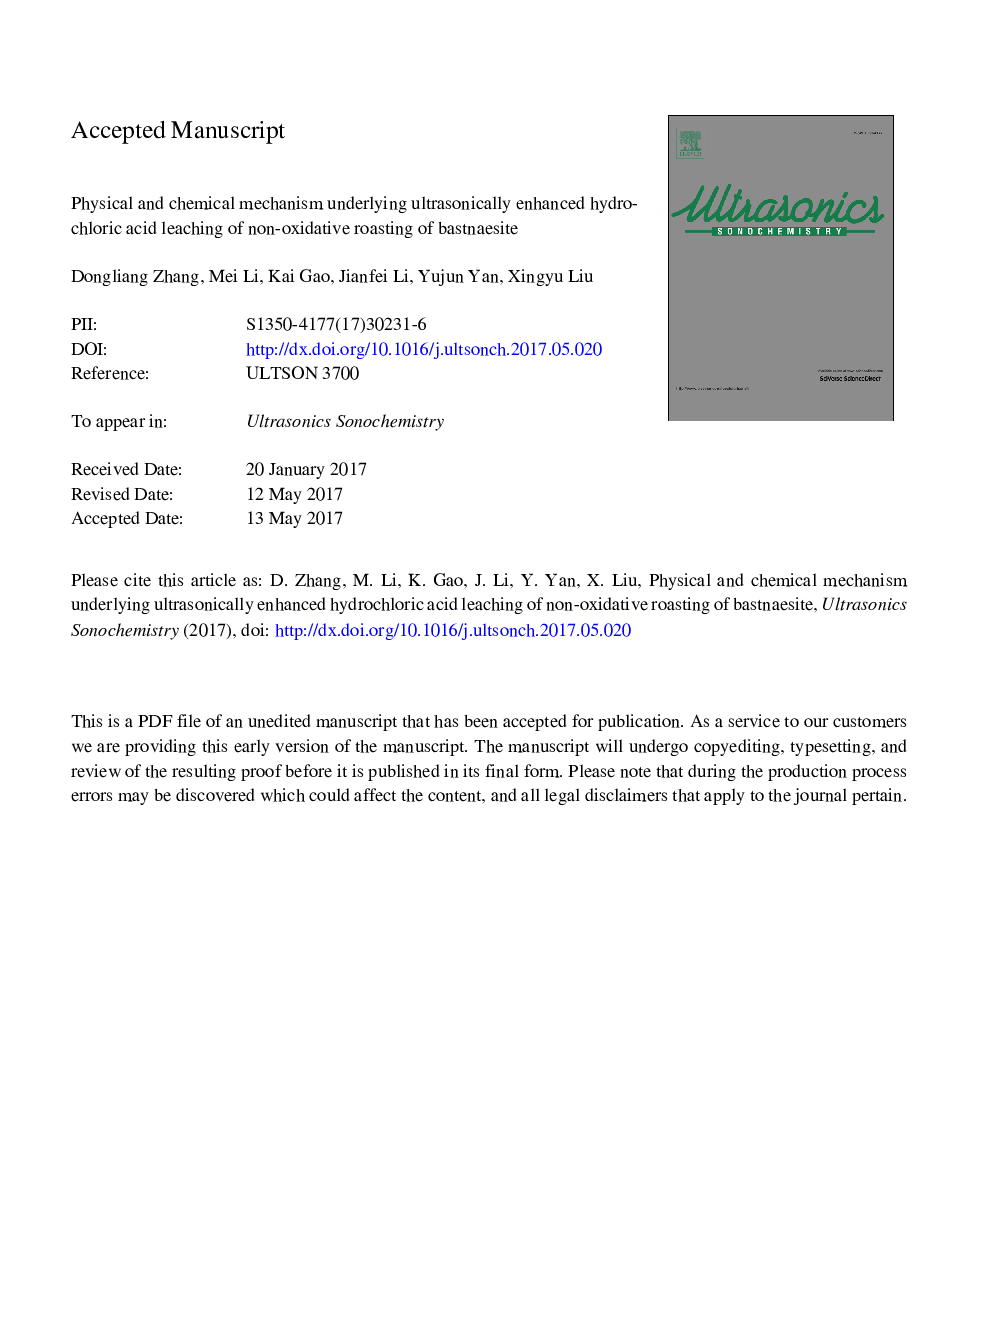 Physical and chemical mechanism underlying ultrasonically enhanced hydrochloric acid leaching of non-oxidative roasting of bastnaesite